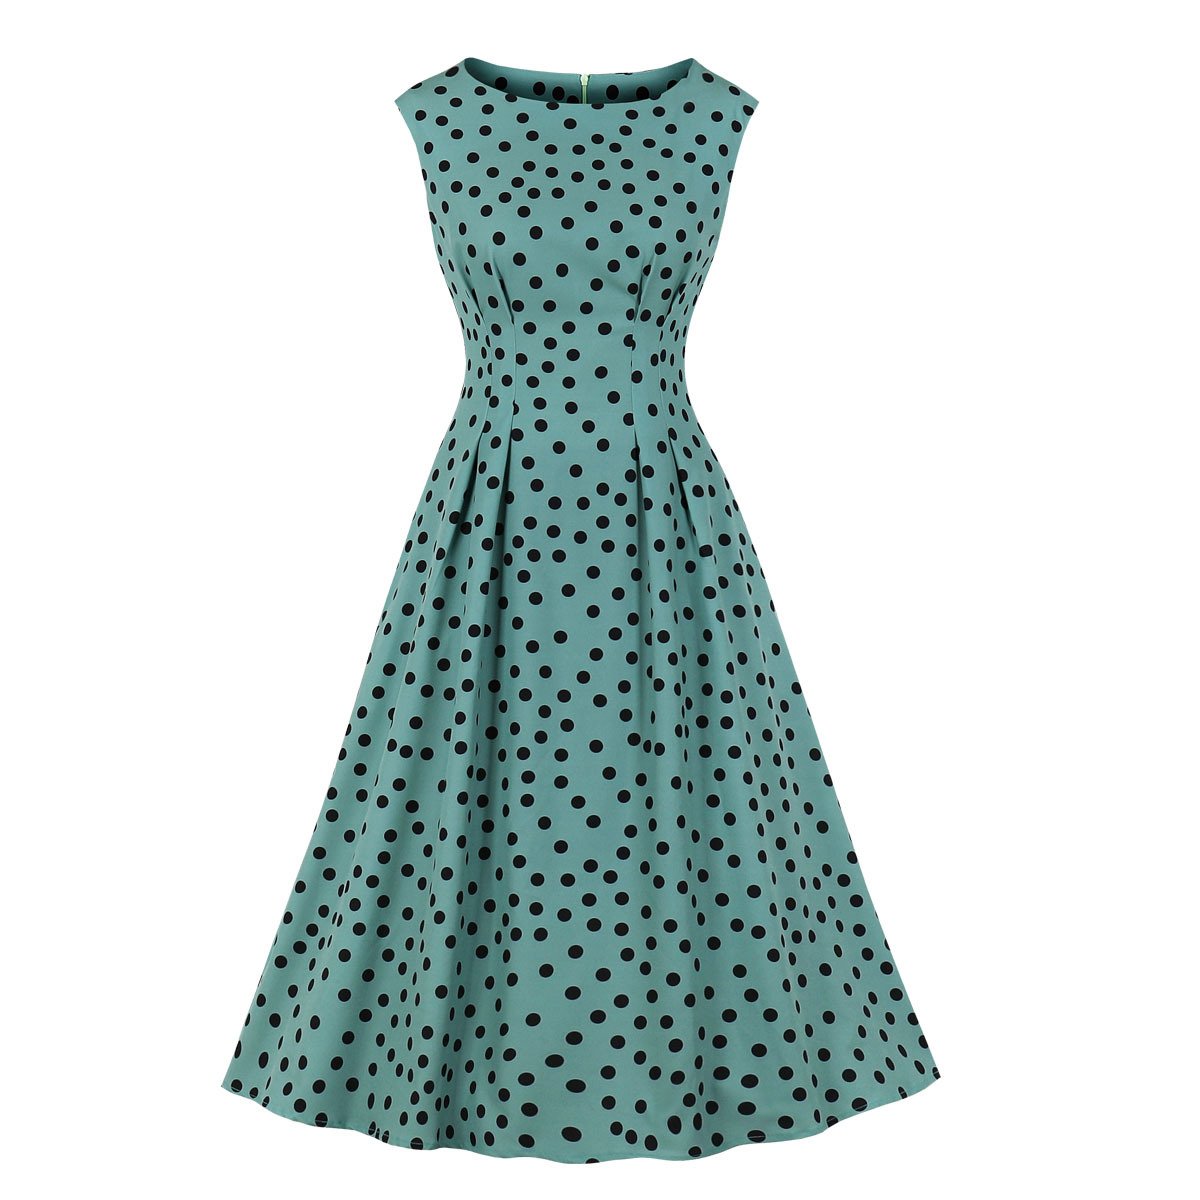 Women Summer Dot Print Retro Dresses-Vintage Dresses-Light Green-S-Free Shipping at meselling99